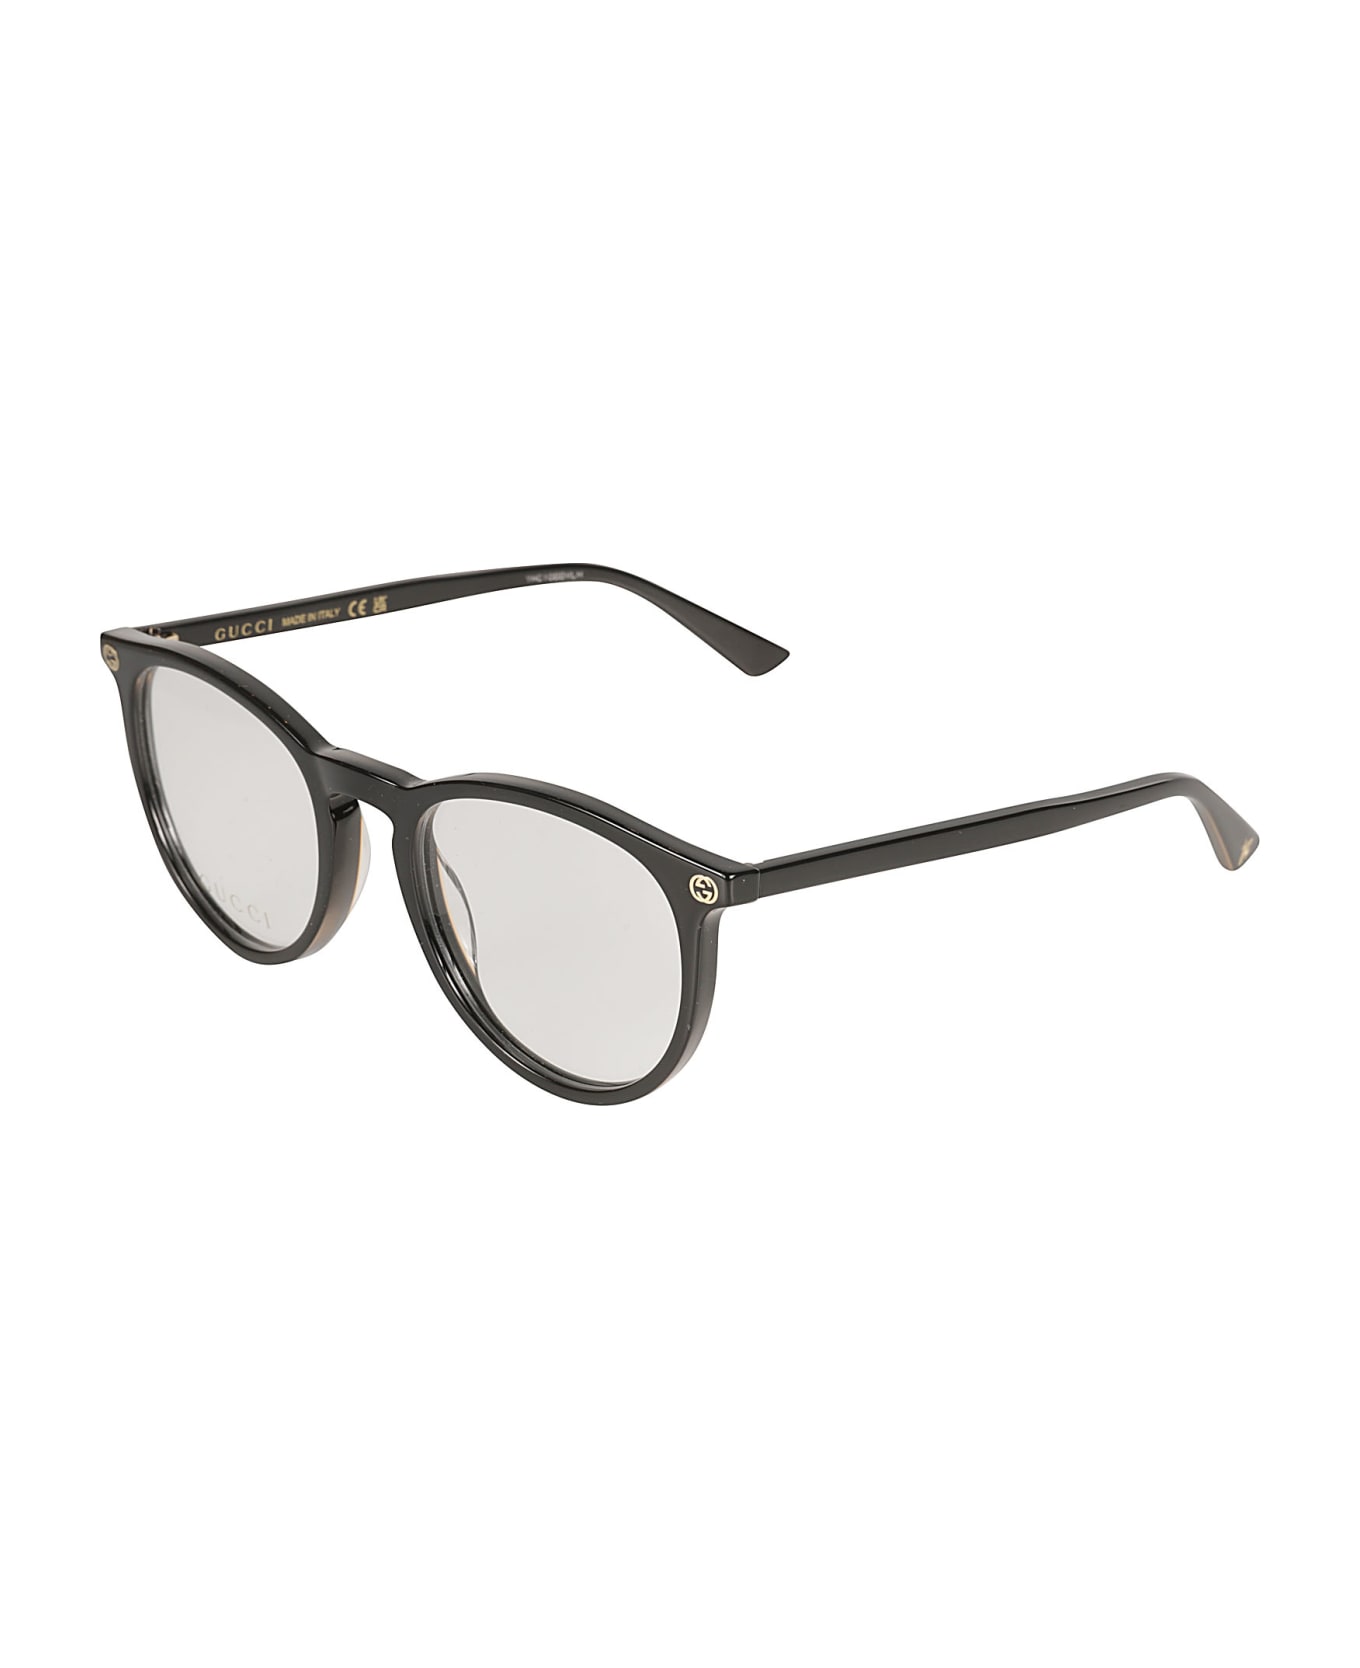 Gucci Eyewear Round Frame Glasses - Black/Transparent